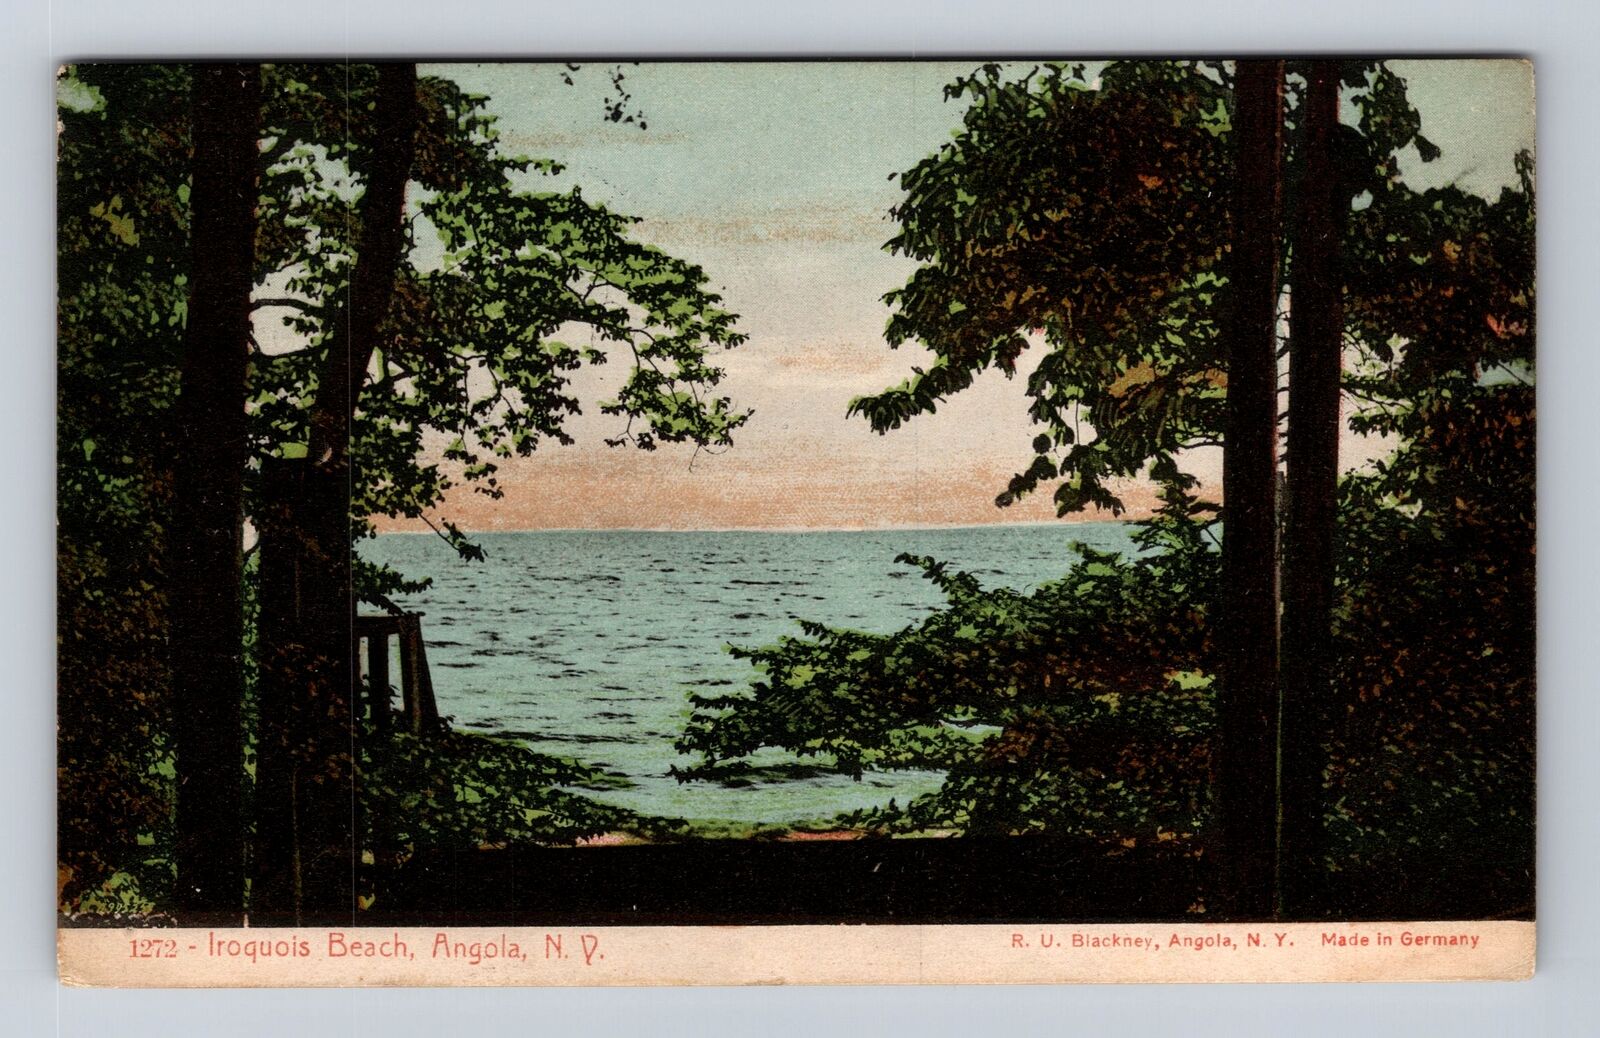 Angola NY-New York, Iroquois Beach, Antique, Vintage c1911 Souvenir Postcard